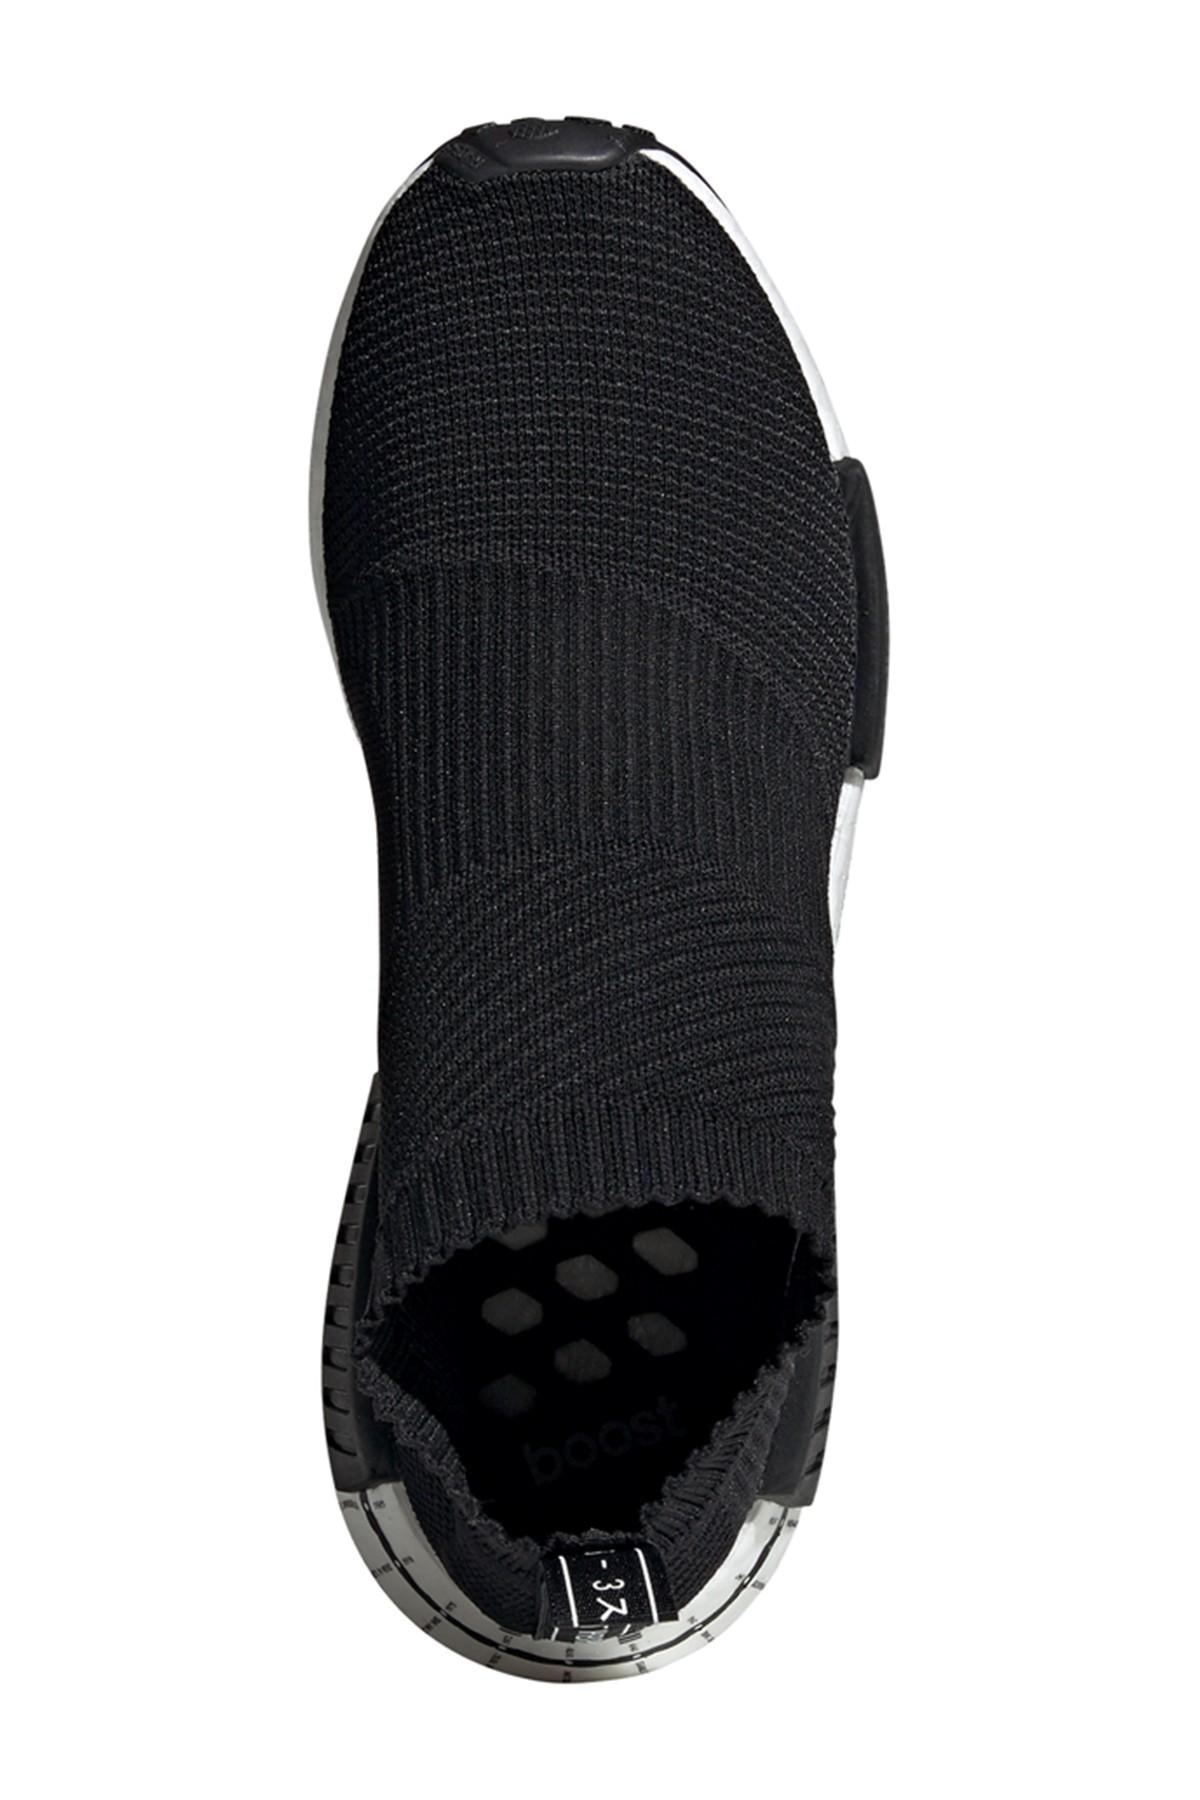 adidas Nmd Cs1 Knit Sneaker in Black for Men - Lyst